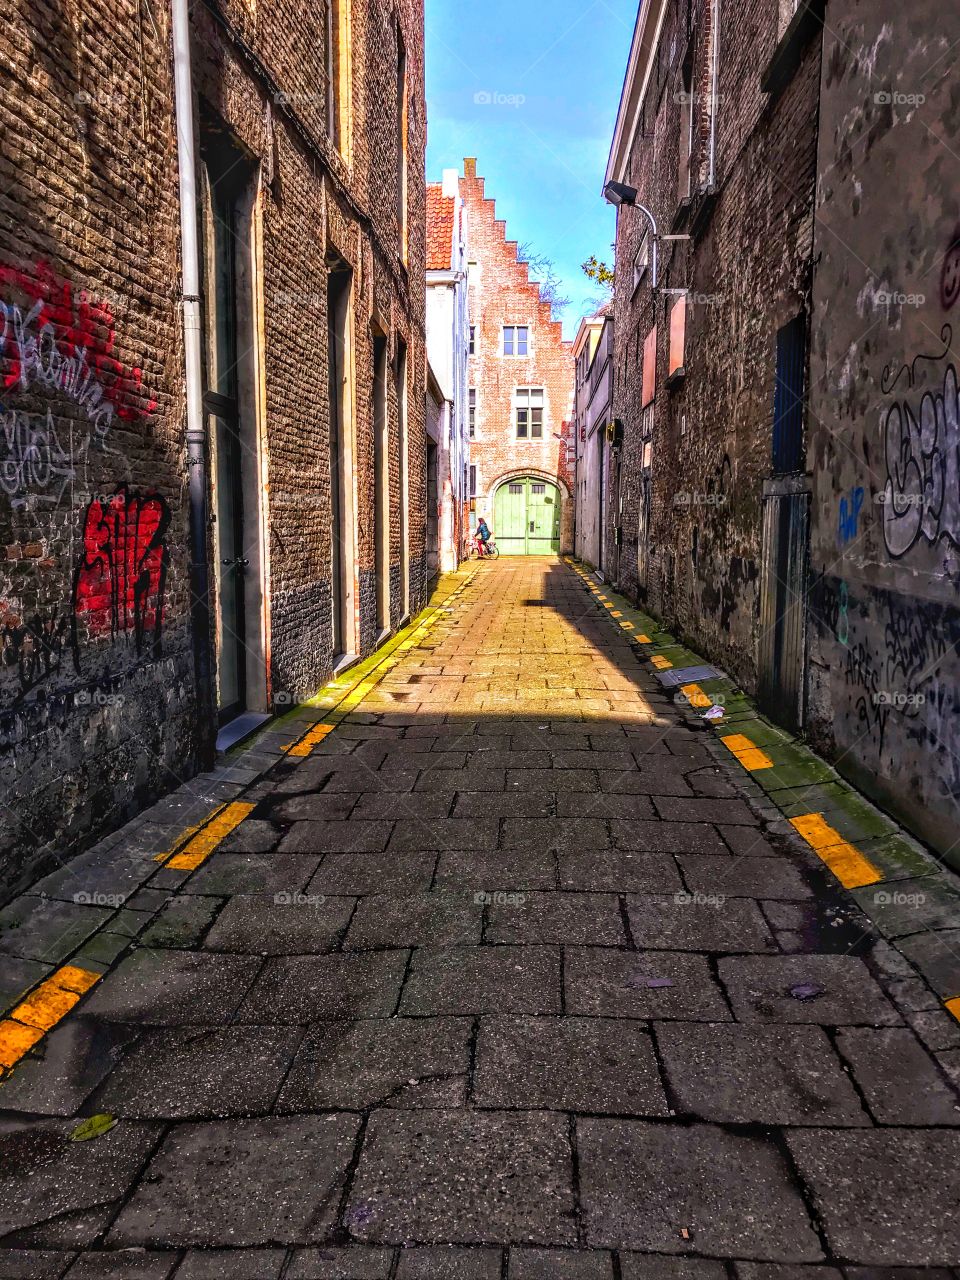 One of many alleyways - Ghent, Belgium 